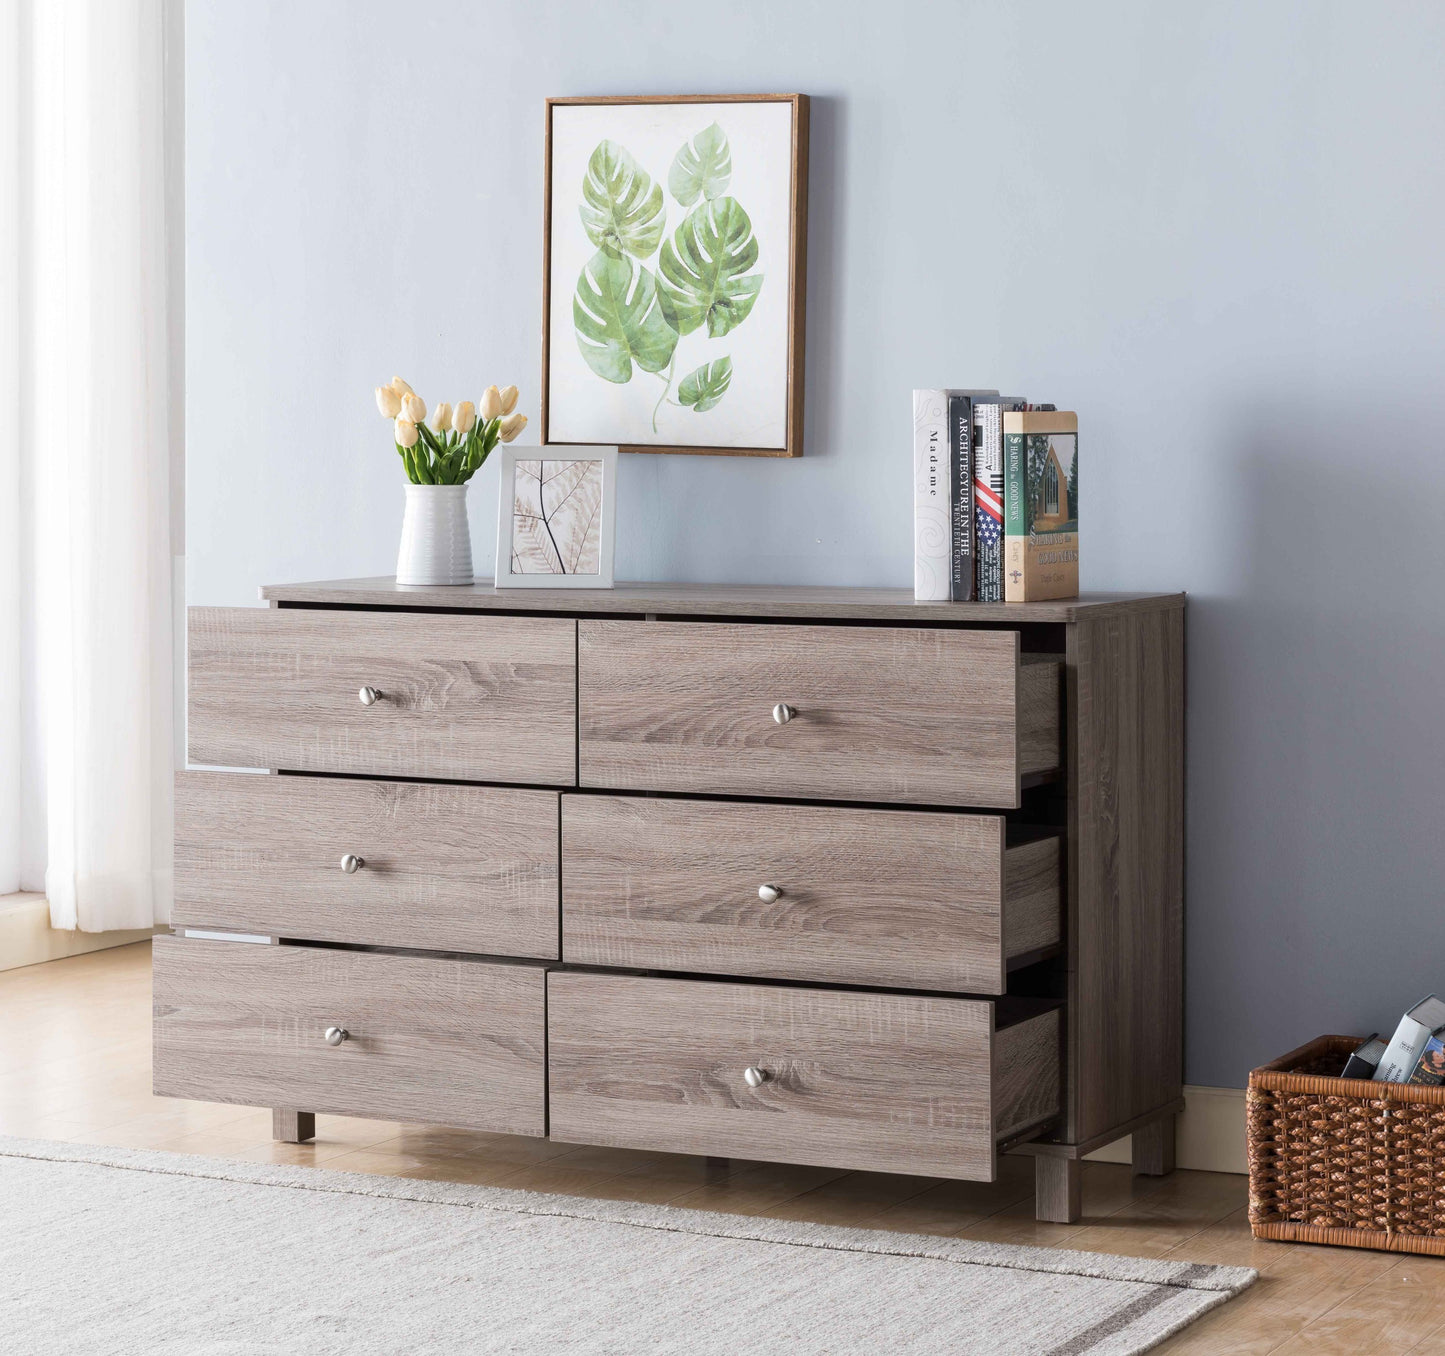 Dresser Six Drawers with Metal Knob Handles - Brown